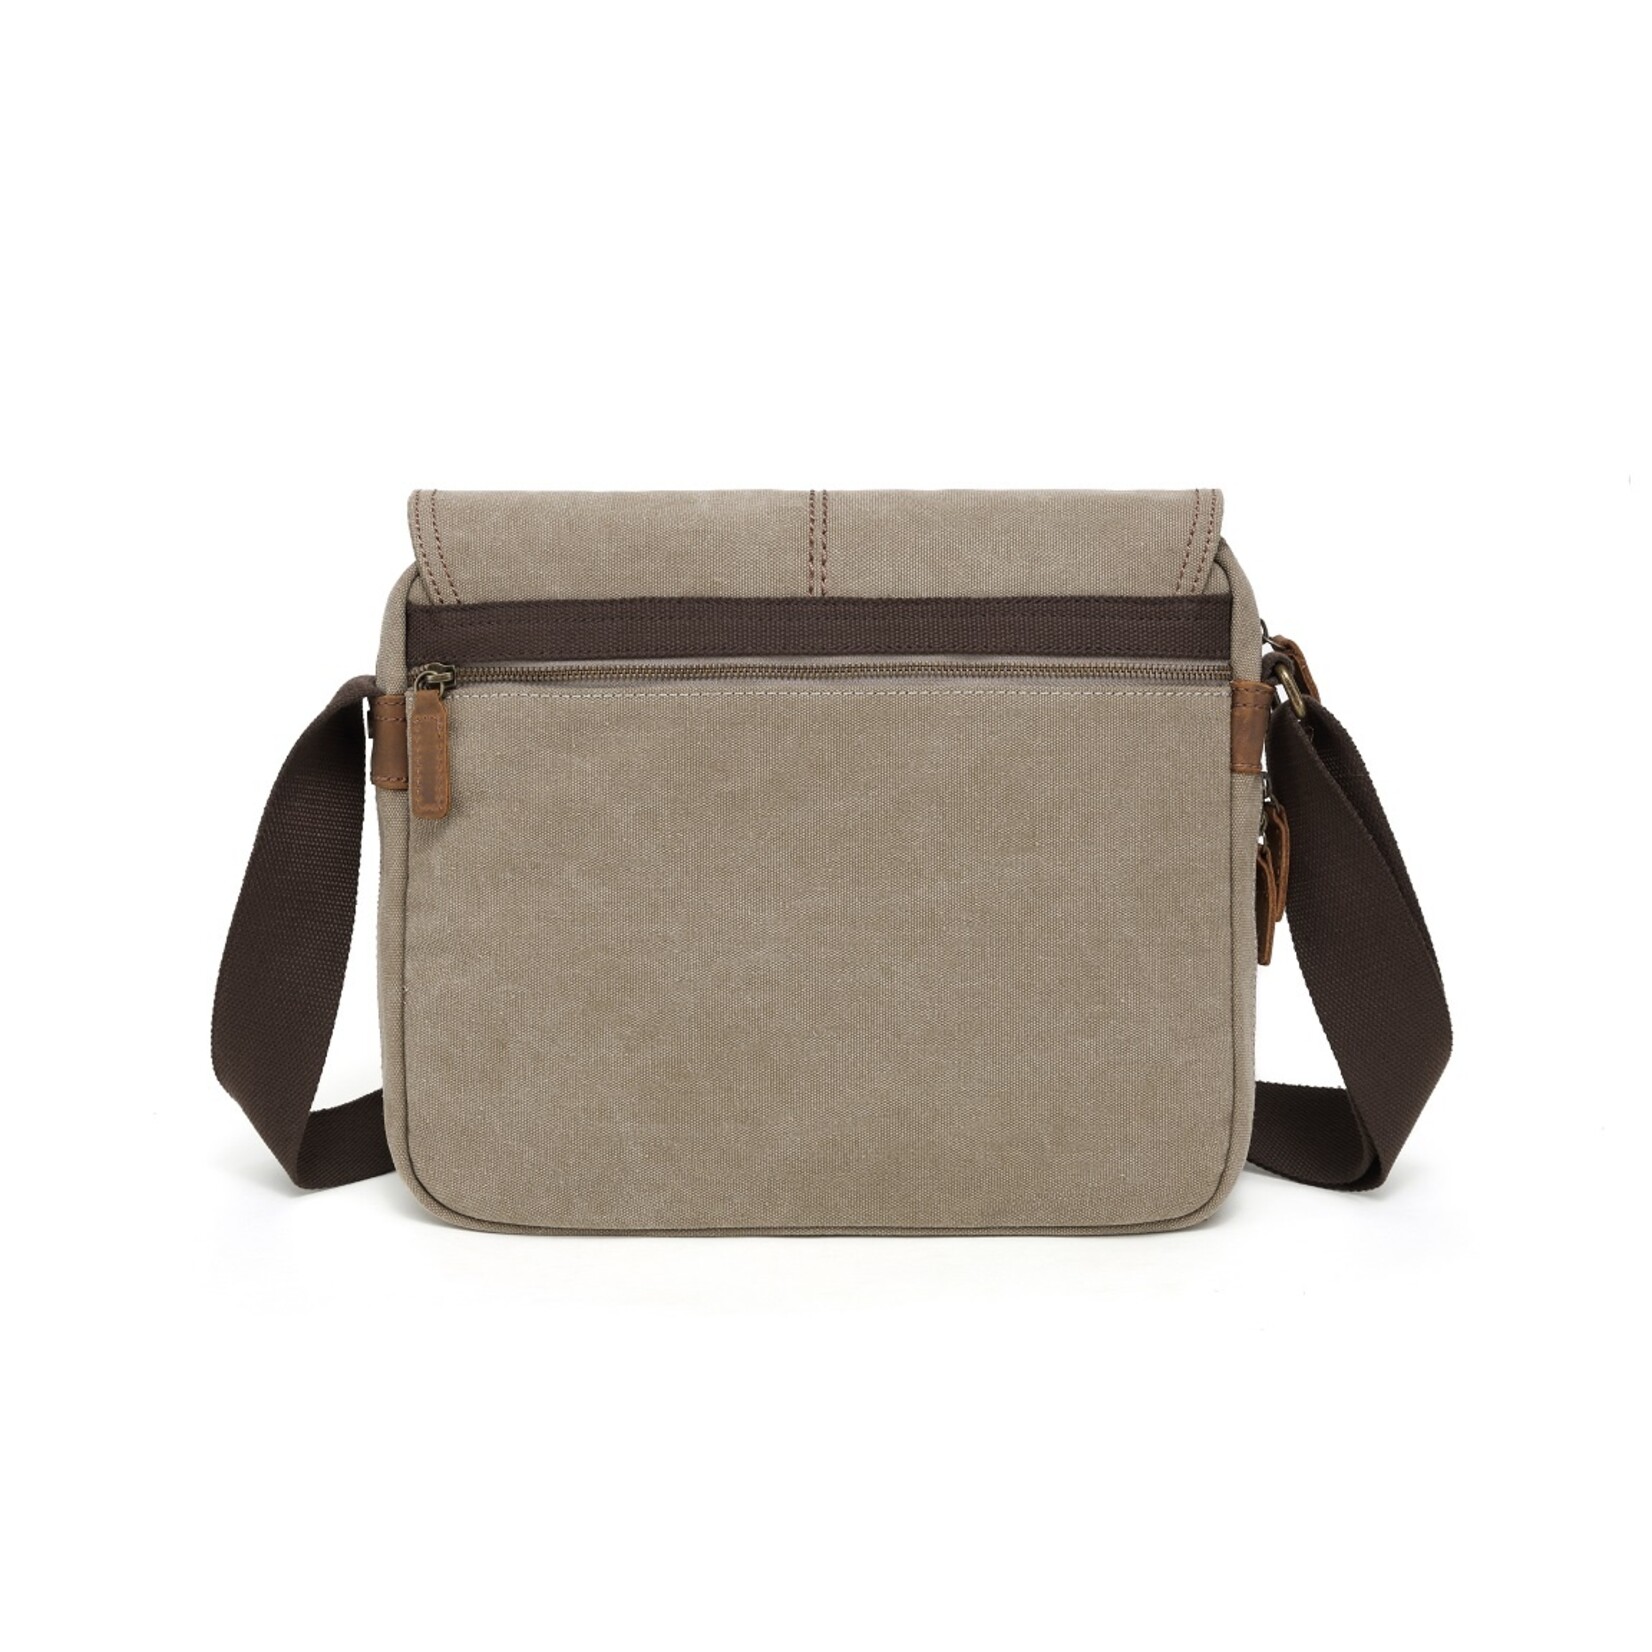 Messenger Bag Khaki Canvas w Flap & Leather Trim